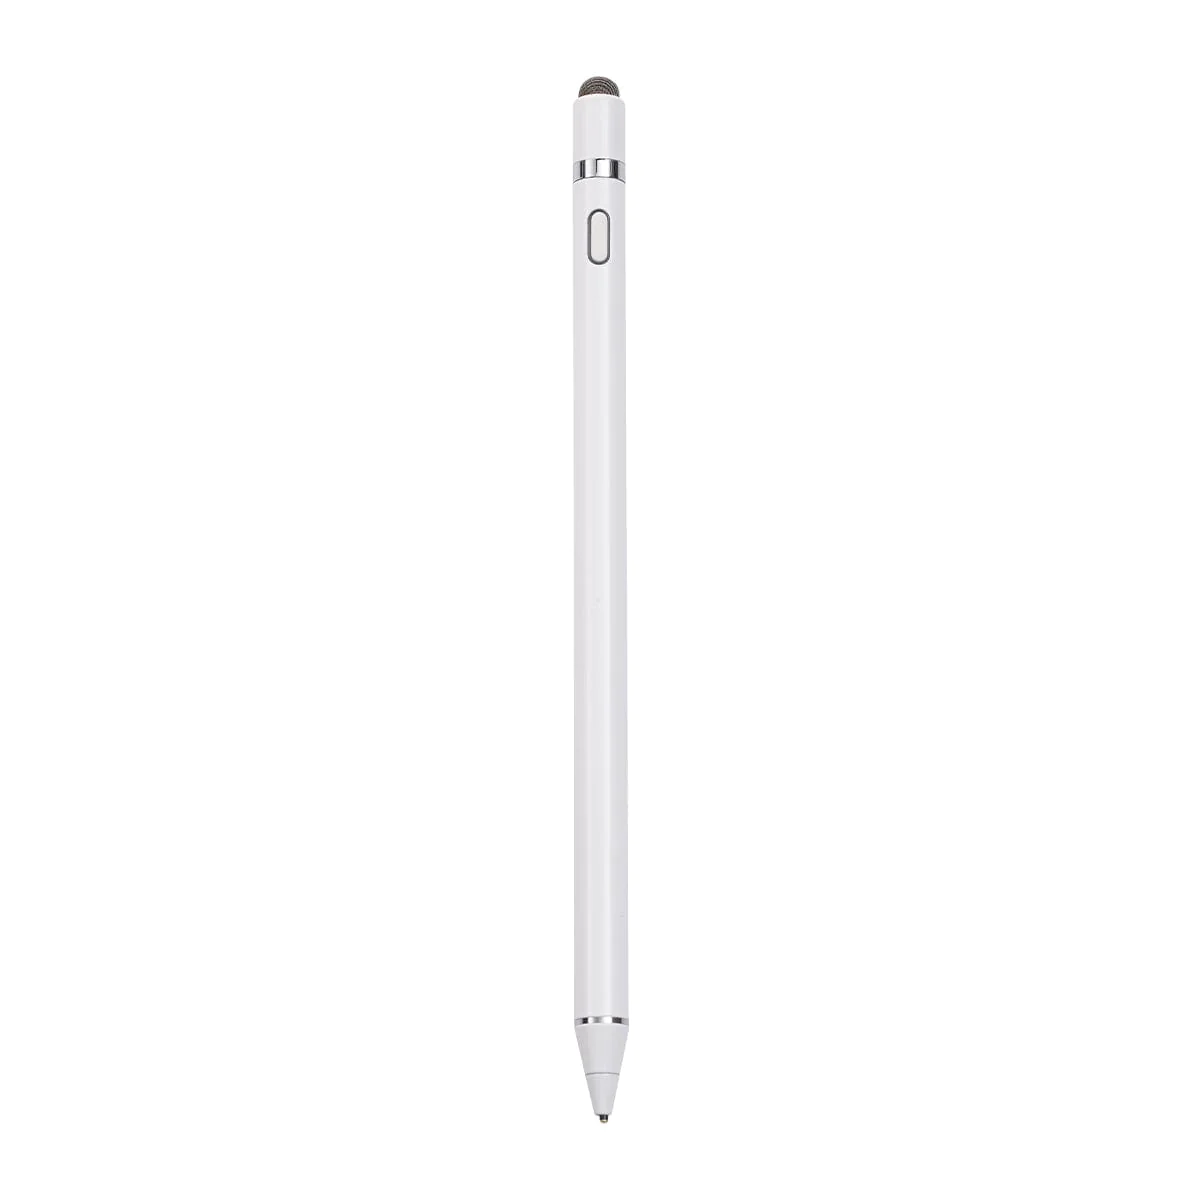 Creion pentru ecran tactil DOOGEE Active Touch Capacitive pentru Tablete Pc T10 T20 T30PRO T20s T10s